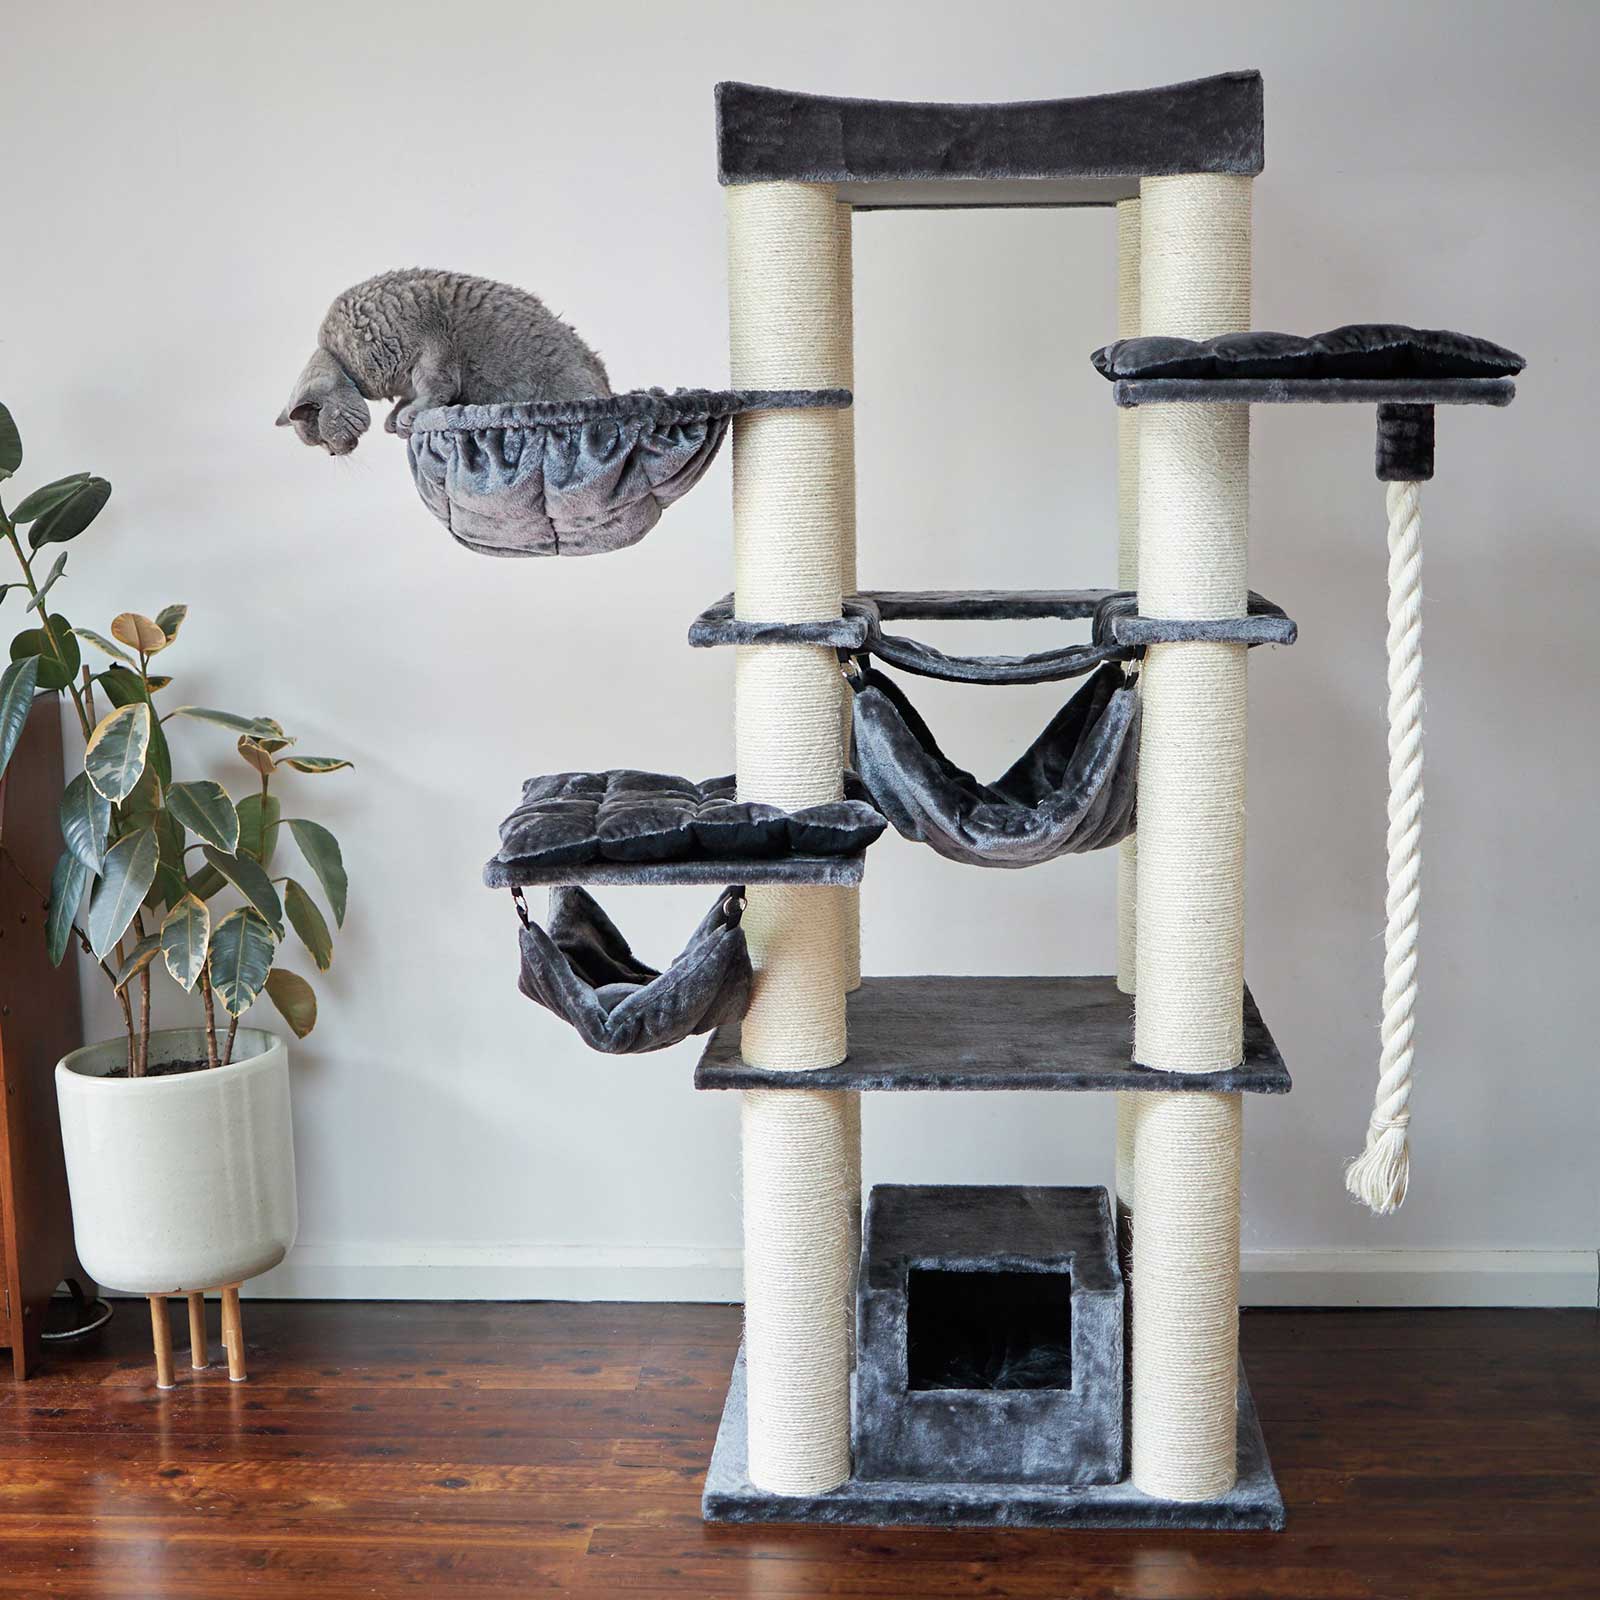 Kazoo Cat Scratcher - Kitty Tower Playground